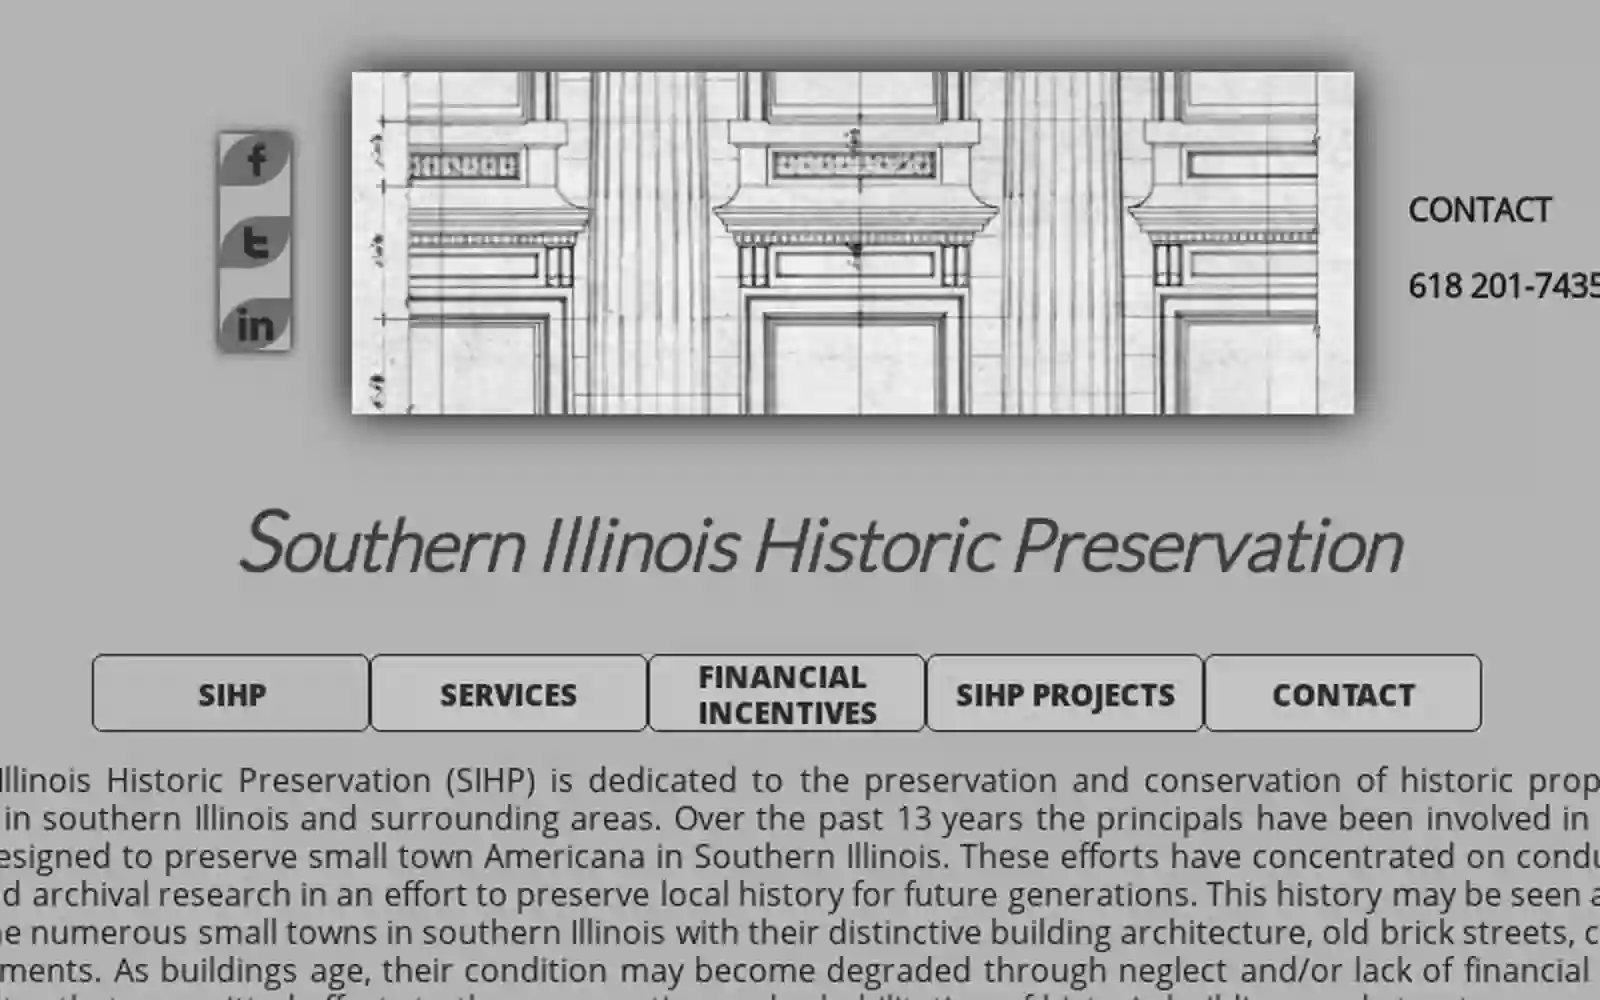 Southern Illinois Historic Preservation